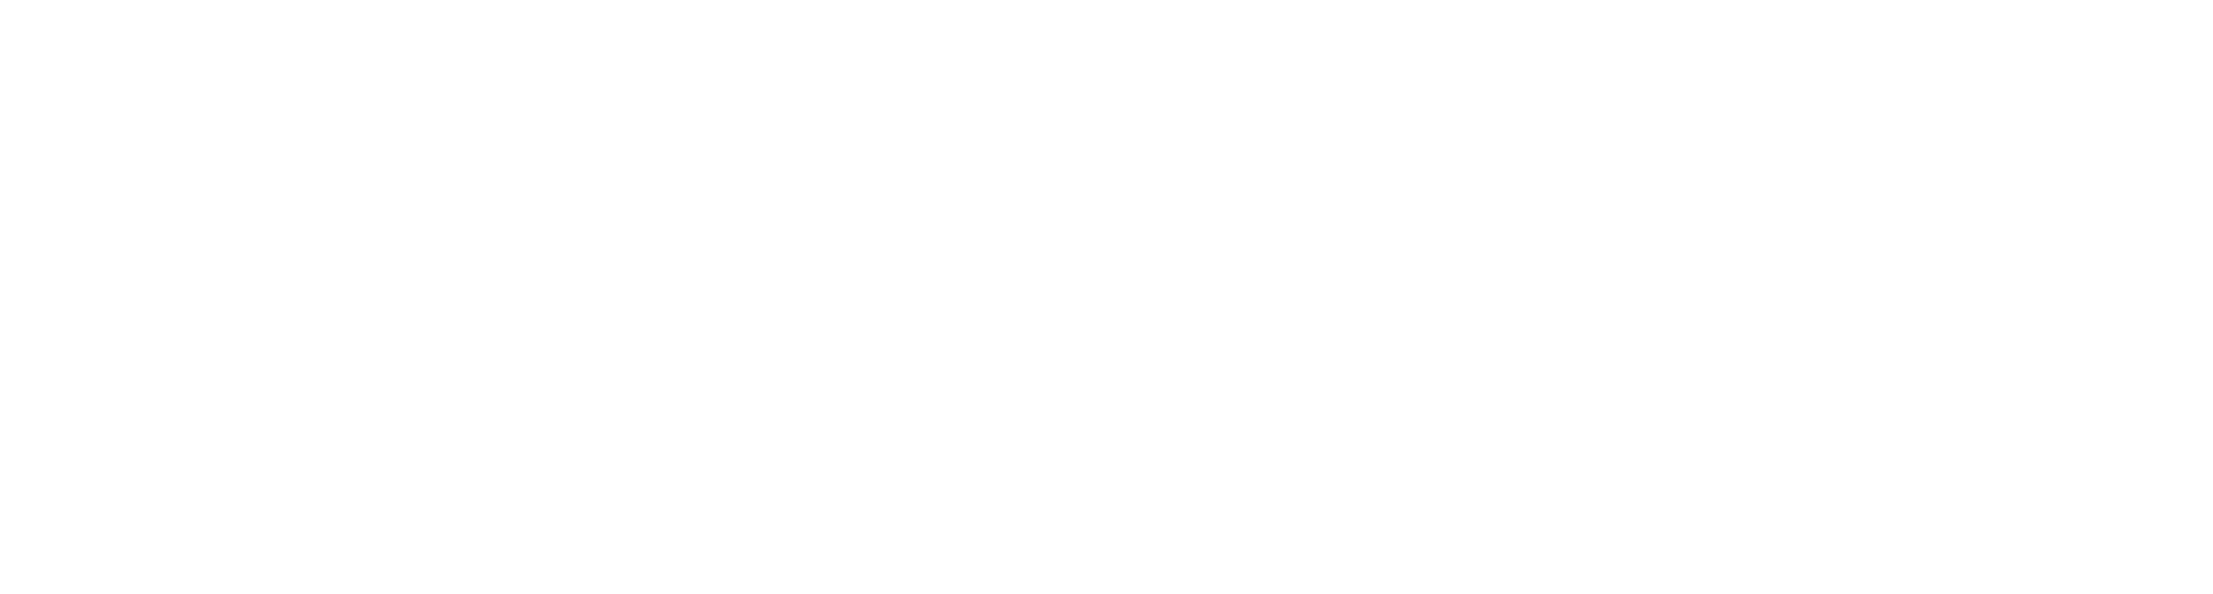 Cinema Technology Magazine logo